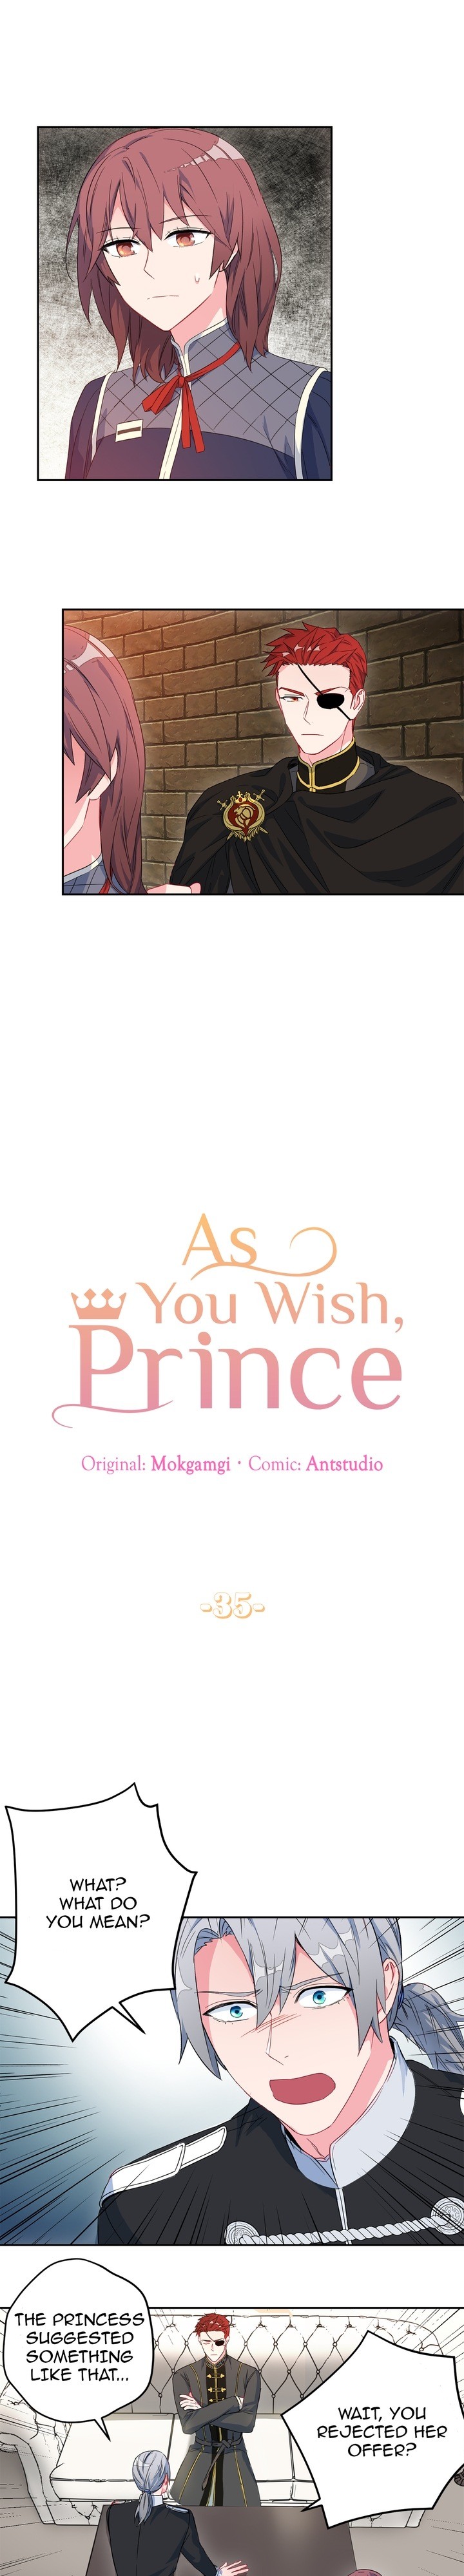 As You Wish, Prince - Page 2